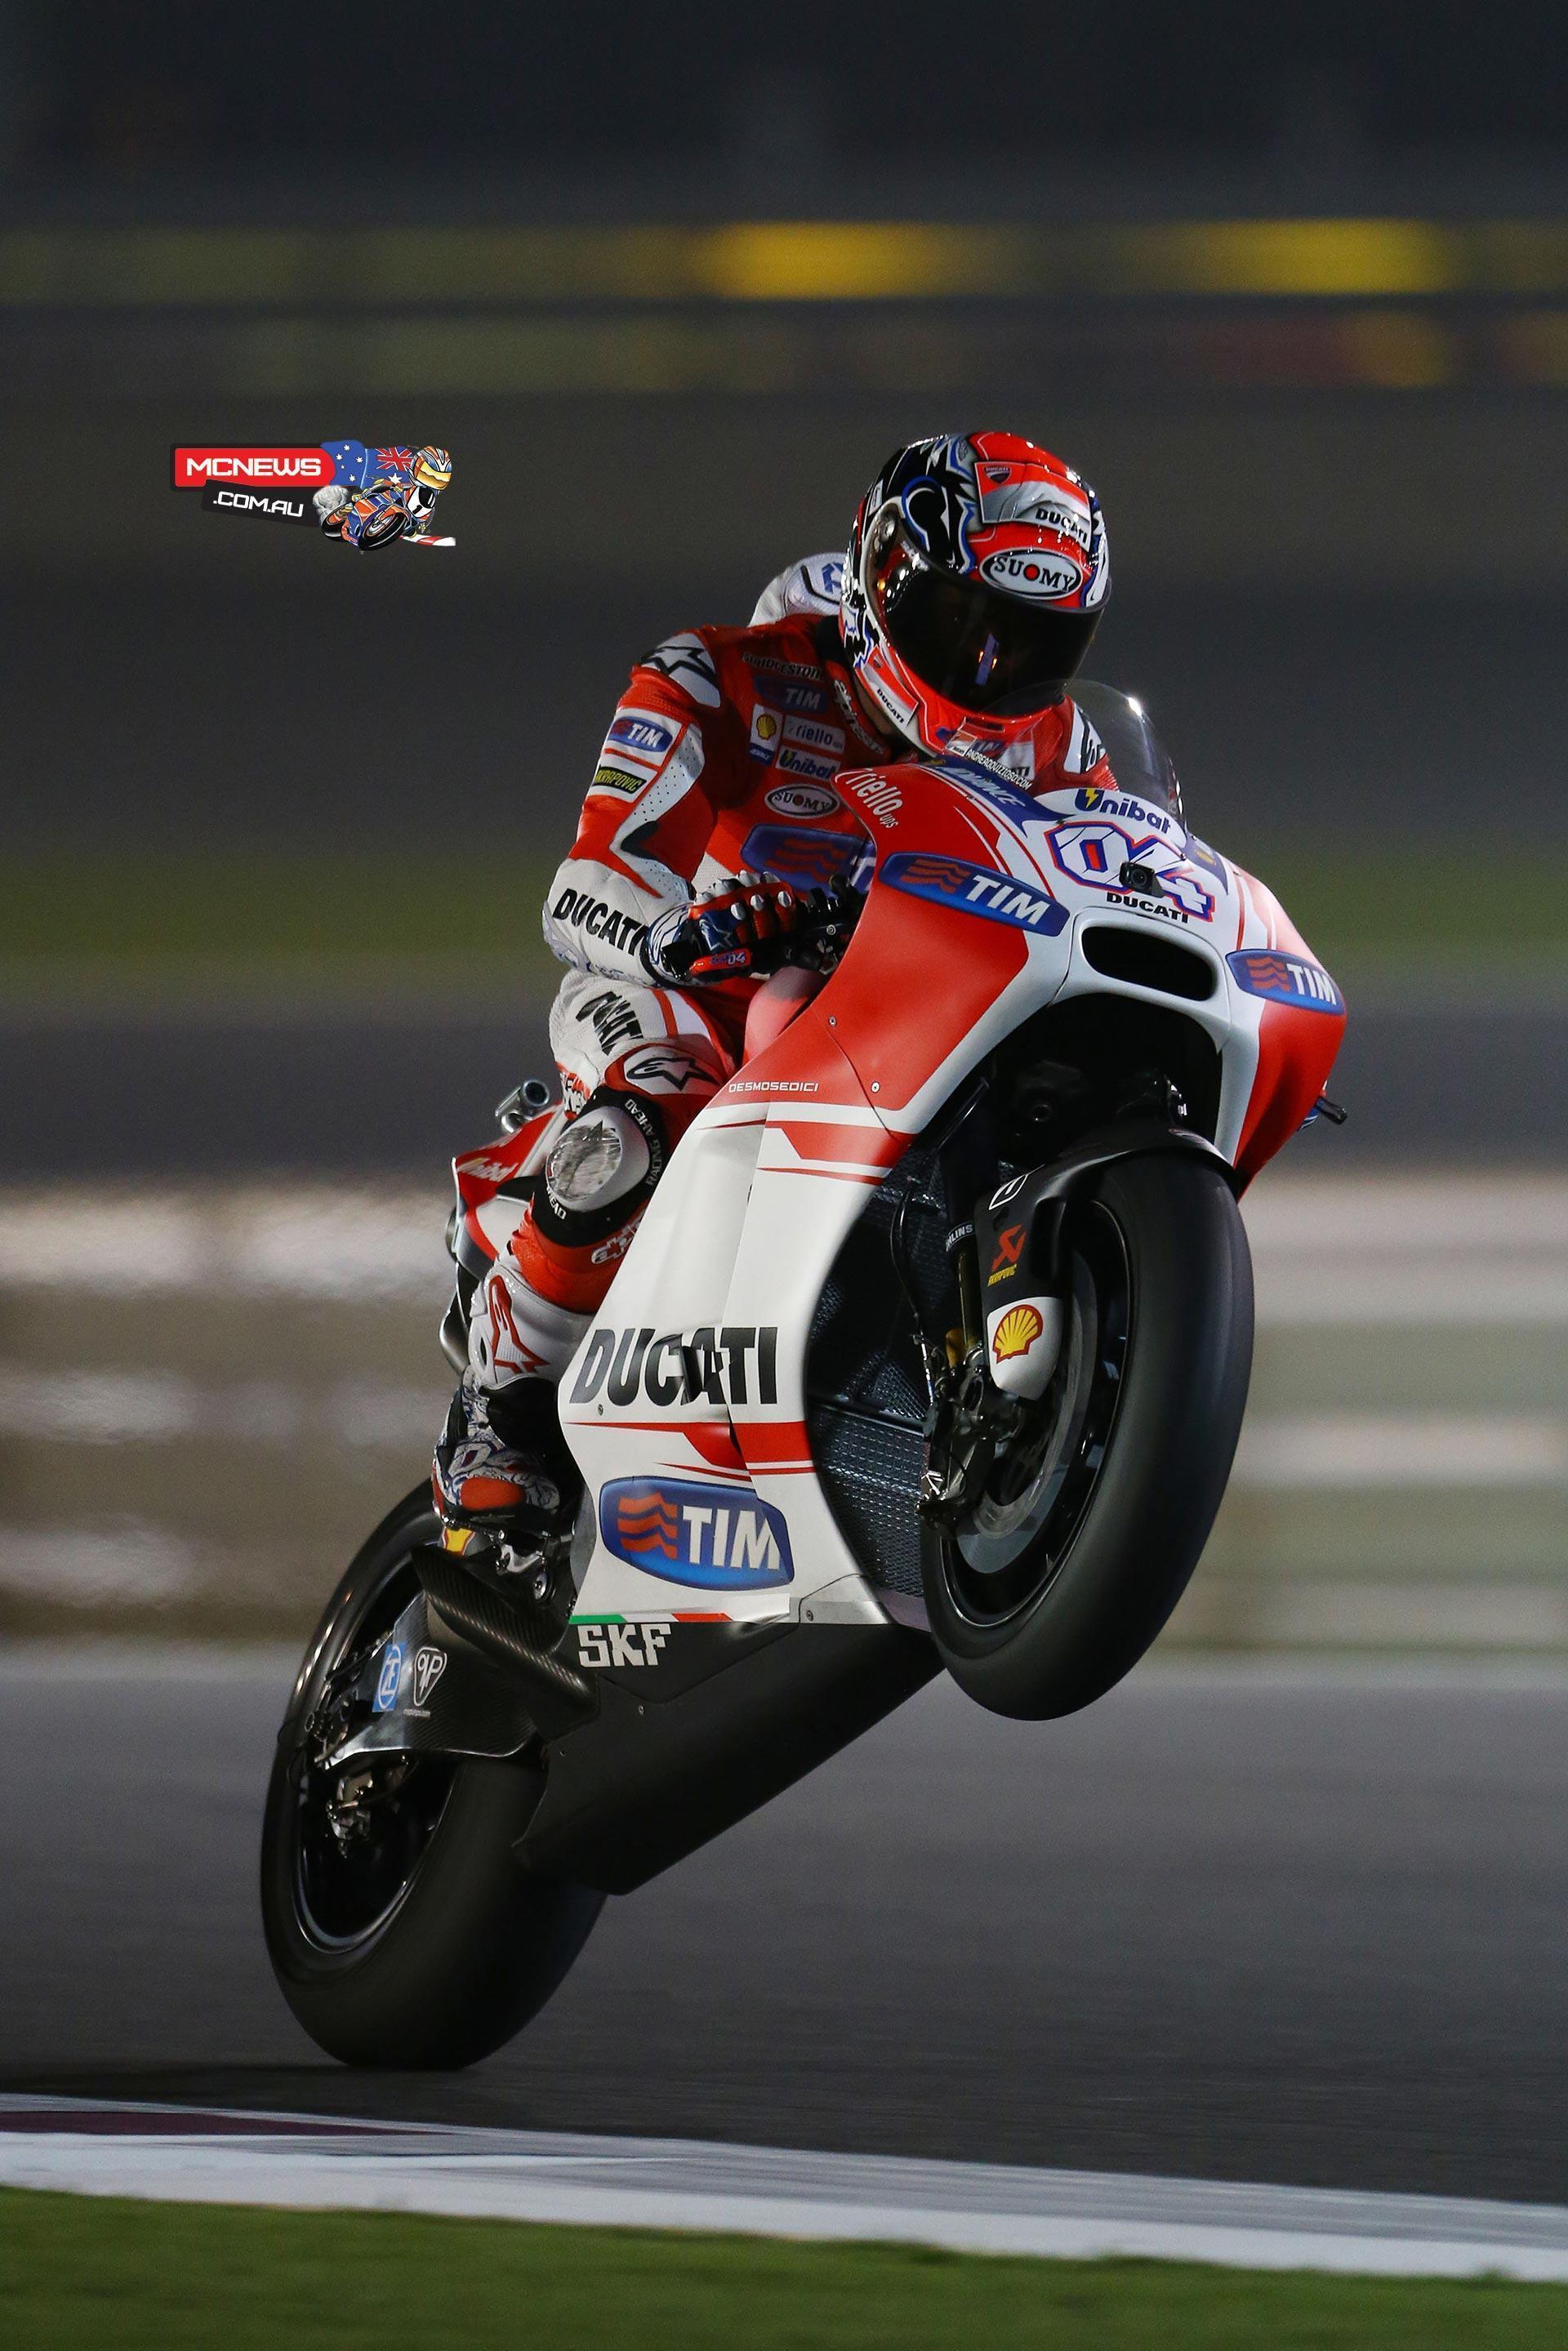 Qatar MotoGP 2015 Image Gallery A